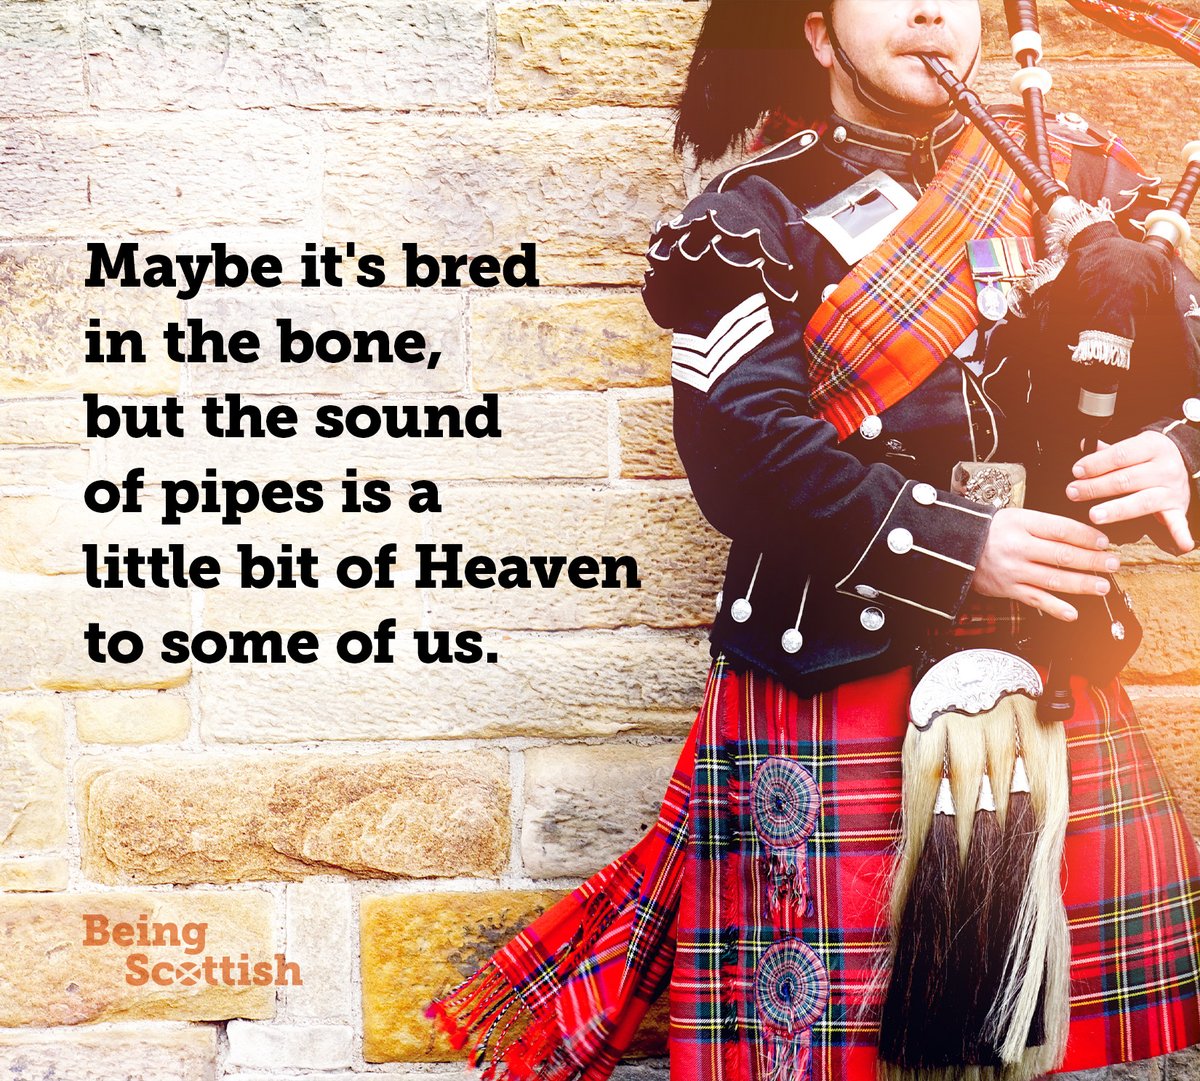 Happy #InternationalBagpipeDay folks! The essential Scottish sound 🏴󠁧󠁢󠁳󠁣󠁴󠁿👌